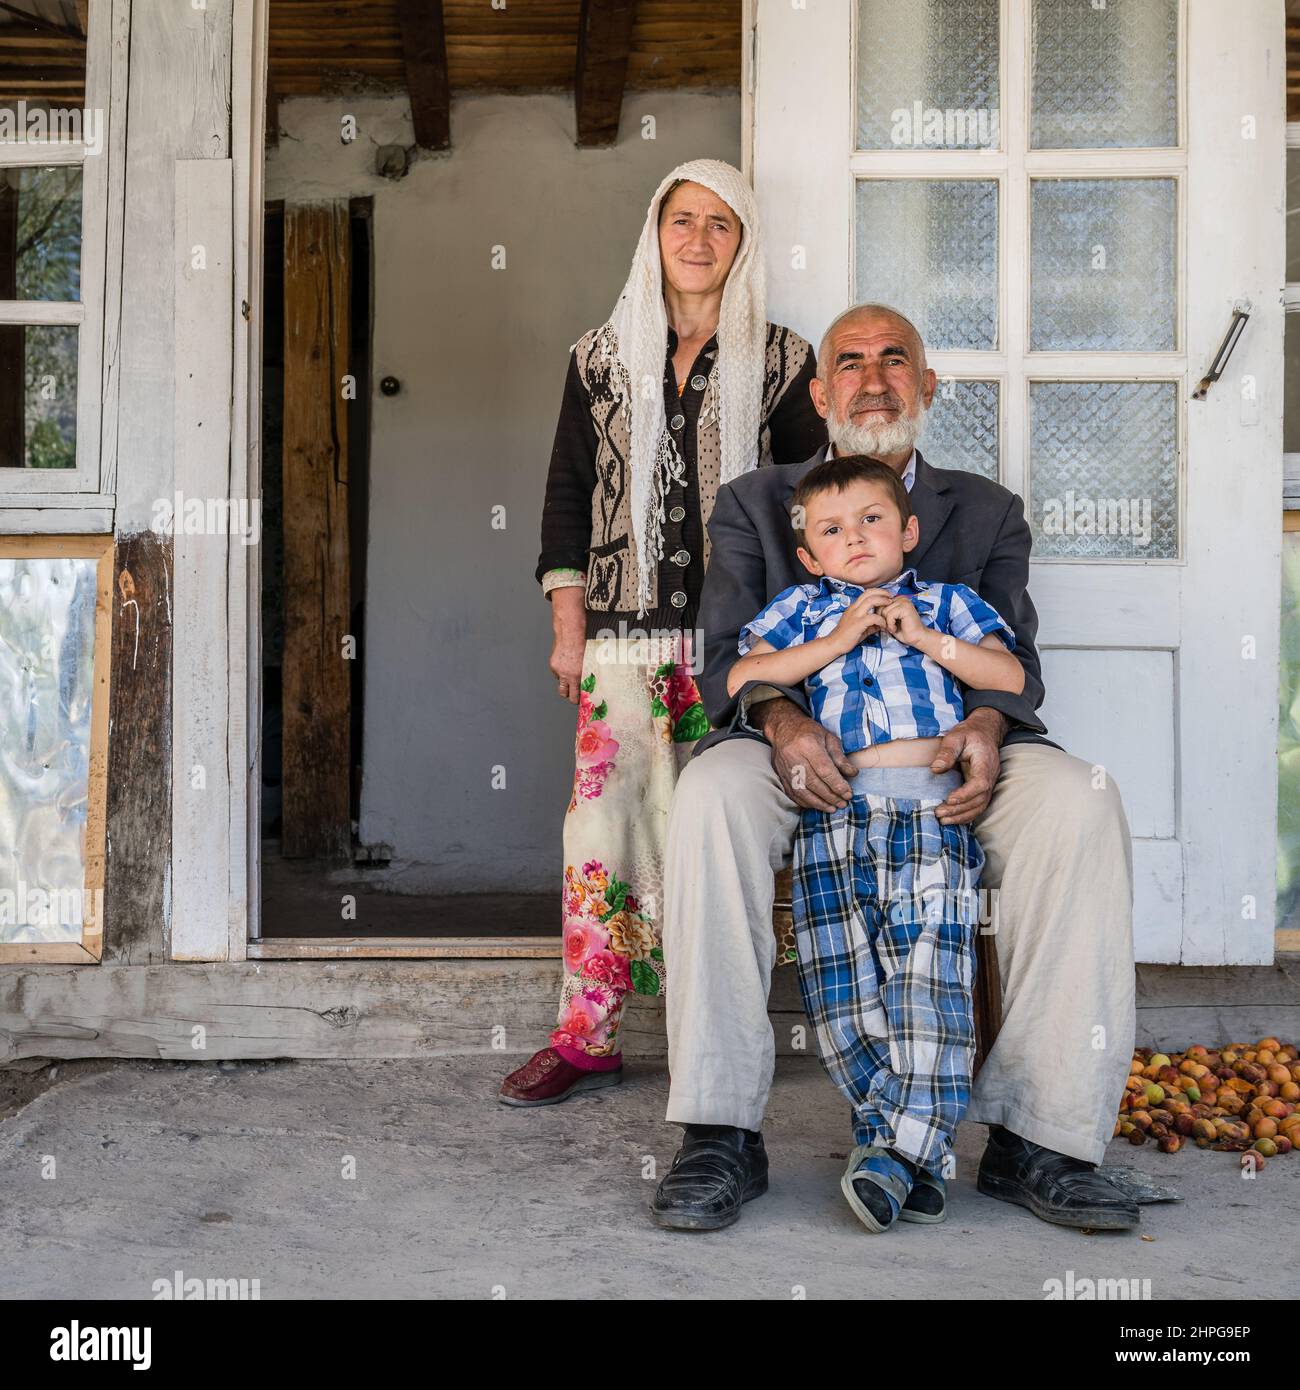 August 26, 2016, Margib village, Tajikistan: A local family by their house in a small village in Yaghnob region of Tajikistan Stock Photo